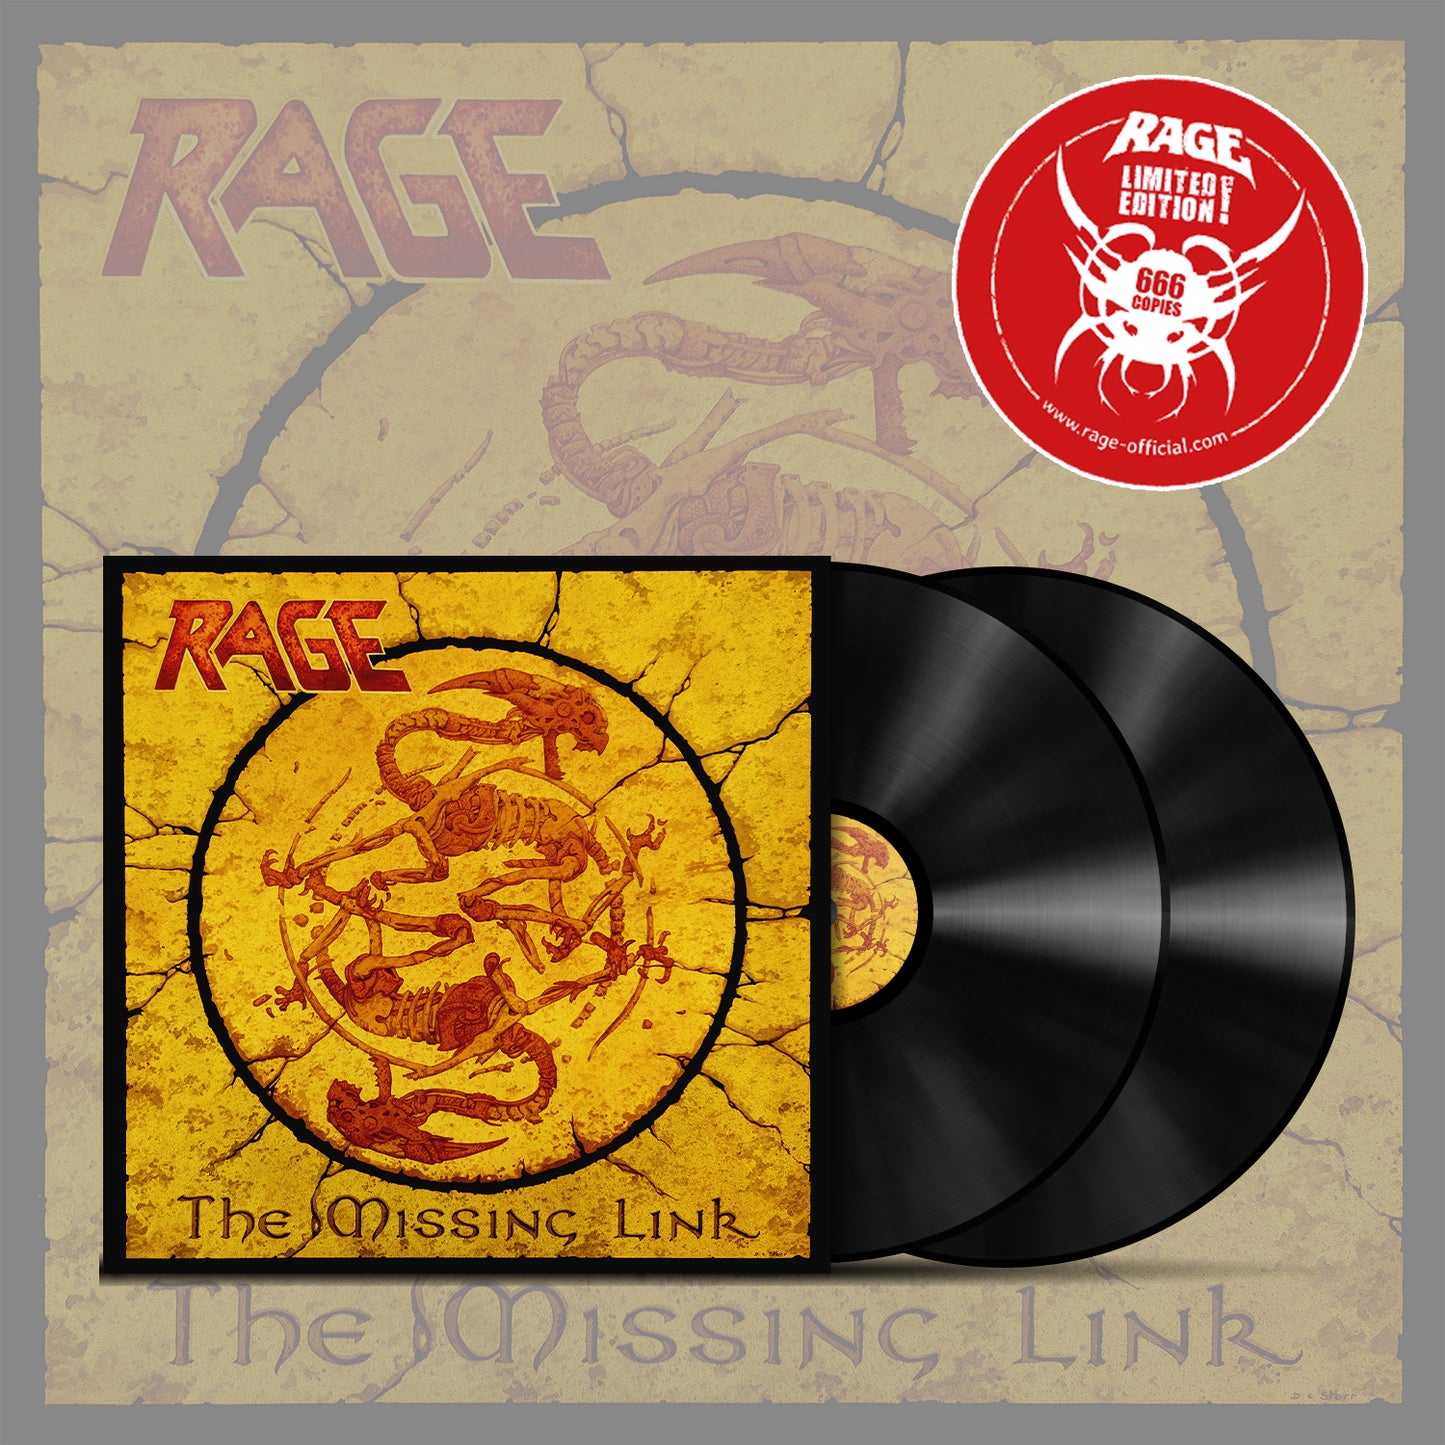 LP "The Missing Link" Double Vinyl Gatefold